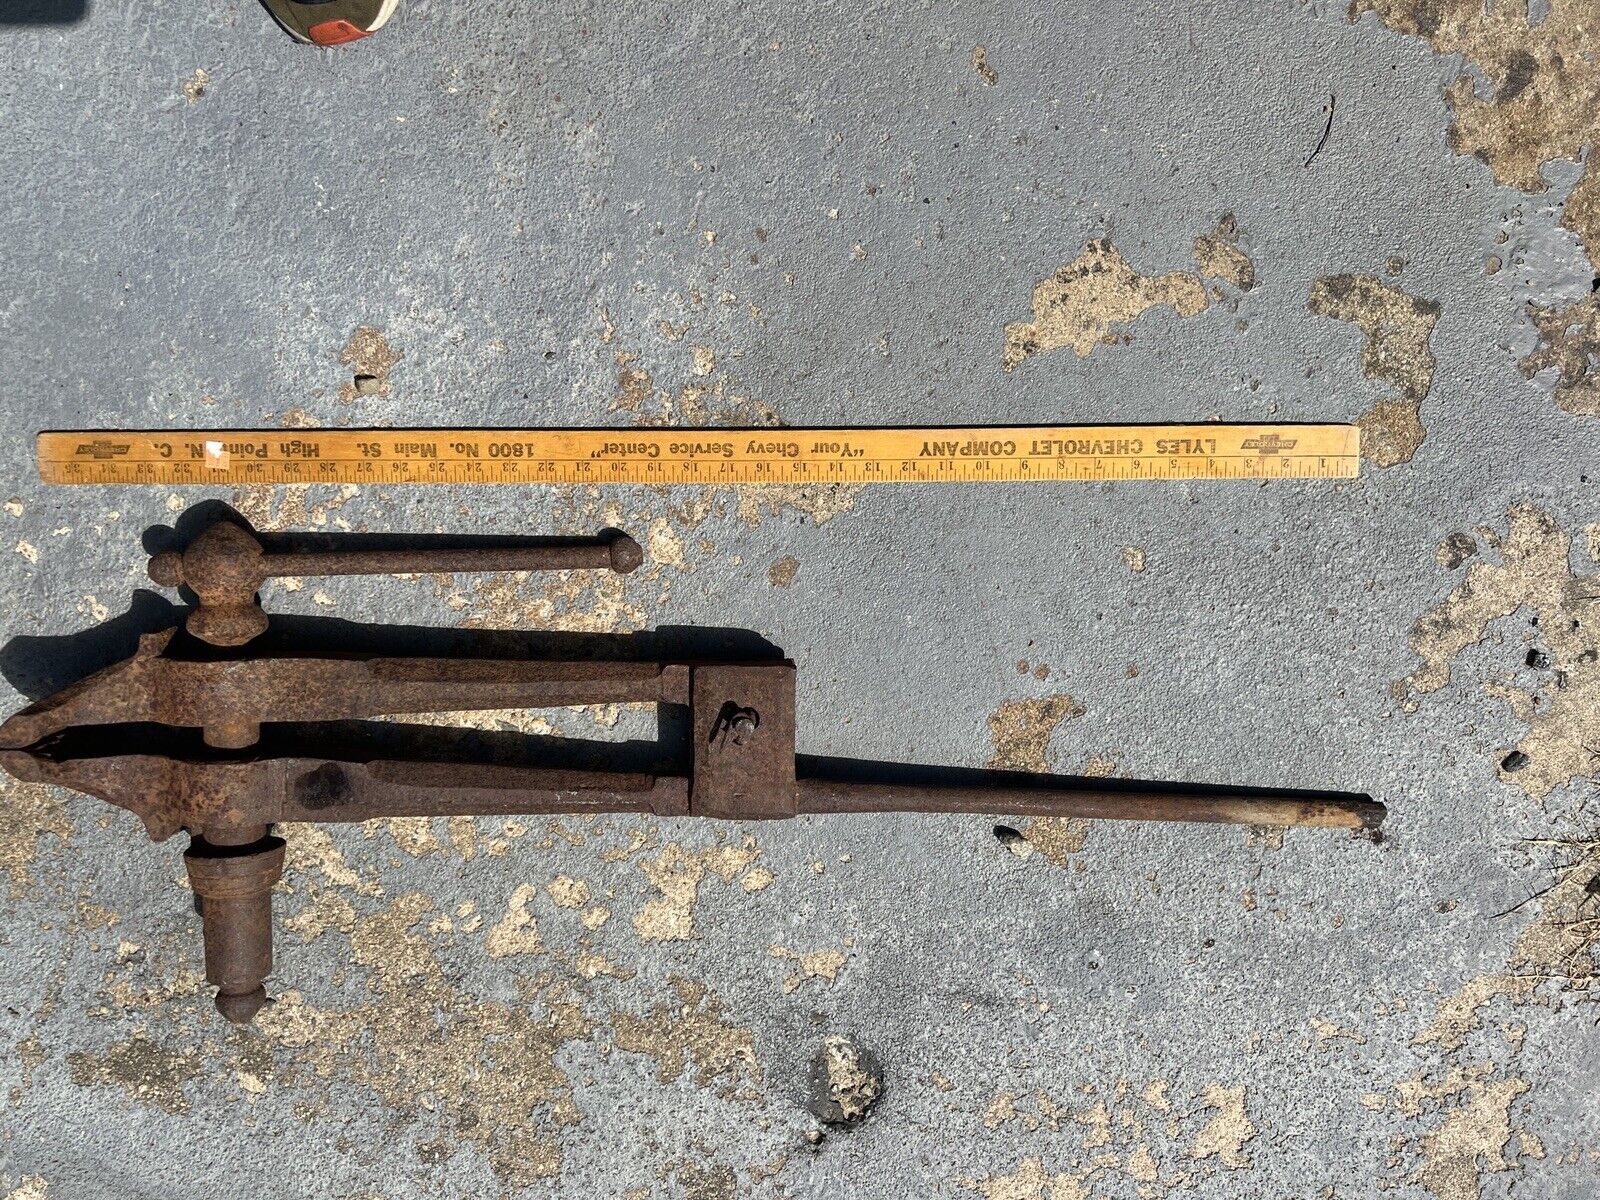 Vintage Antique Blacksmith Post Leg Vise forge anvil tool